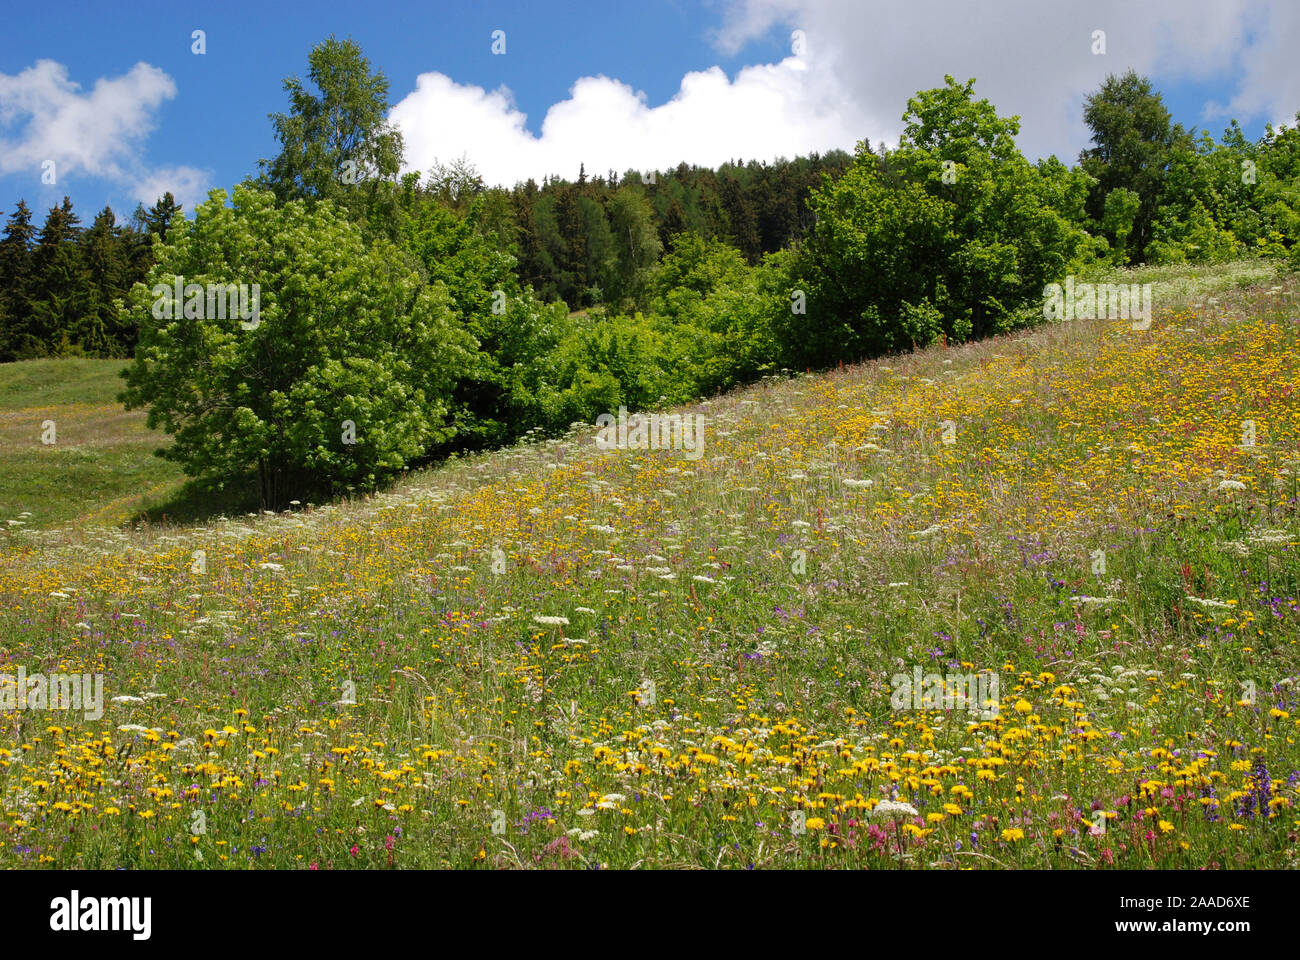 Europa; Schweiz; Albinen; Wallis; Berg; Bergwiese; Blumen; Blumenwiese; bunt; bunte; Landschaft; Stock Photo